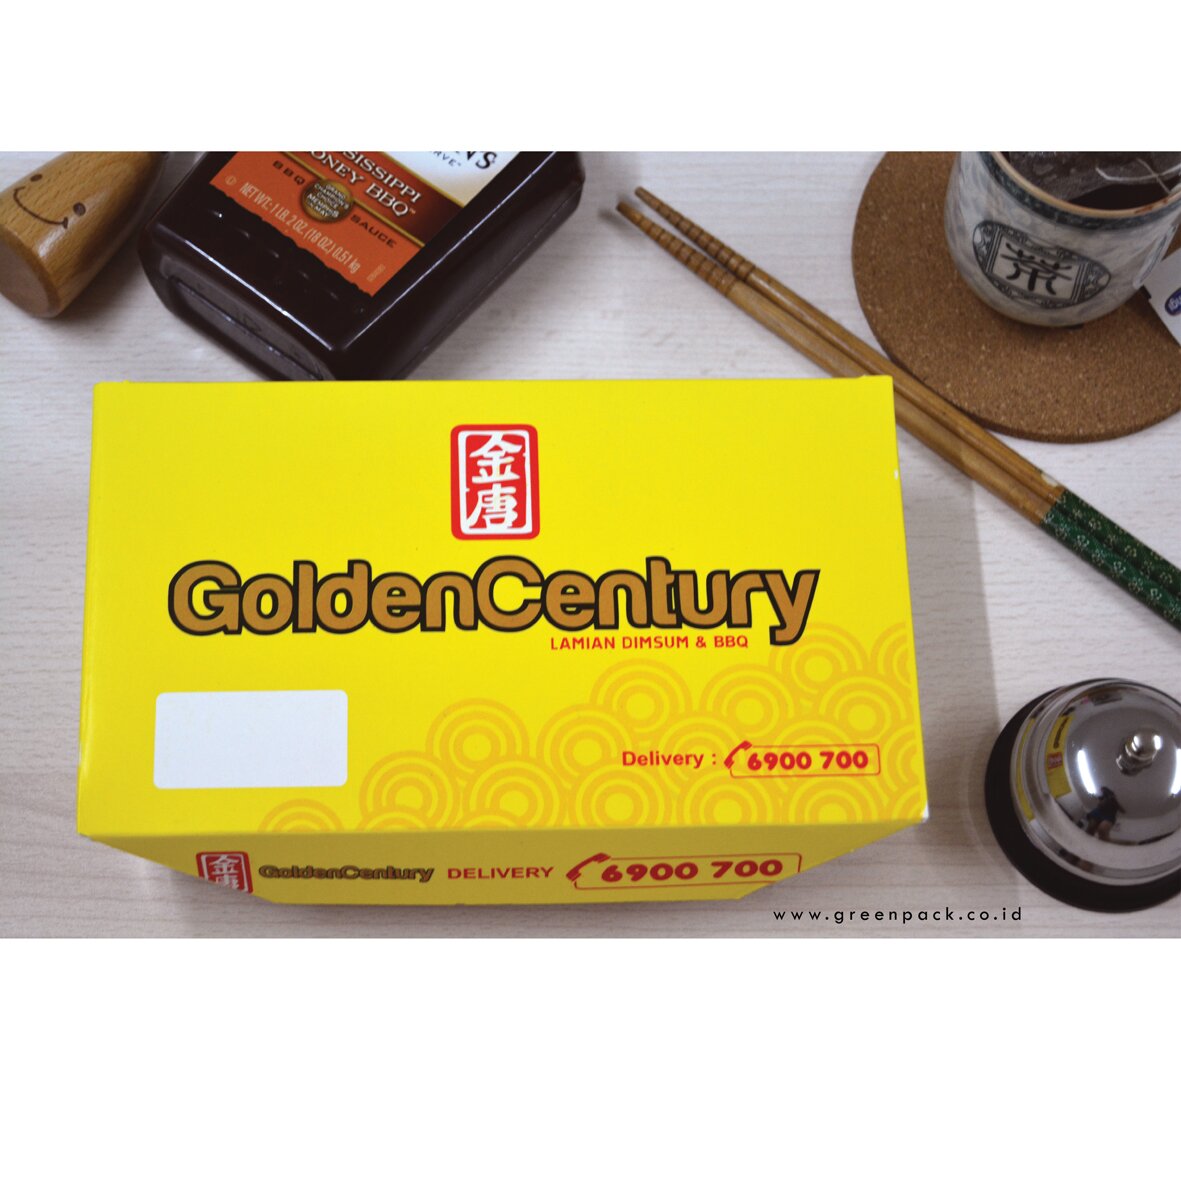 Golden-century-02-compres